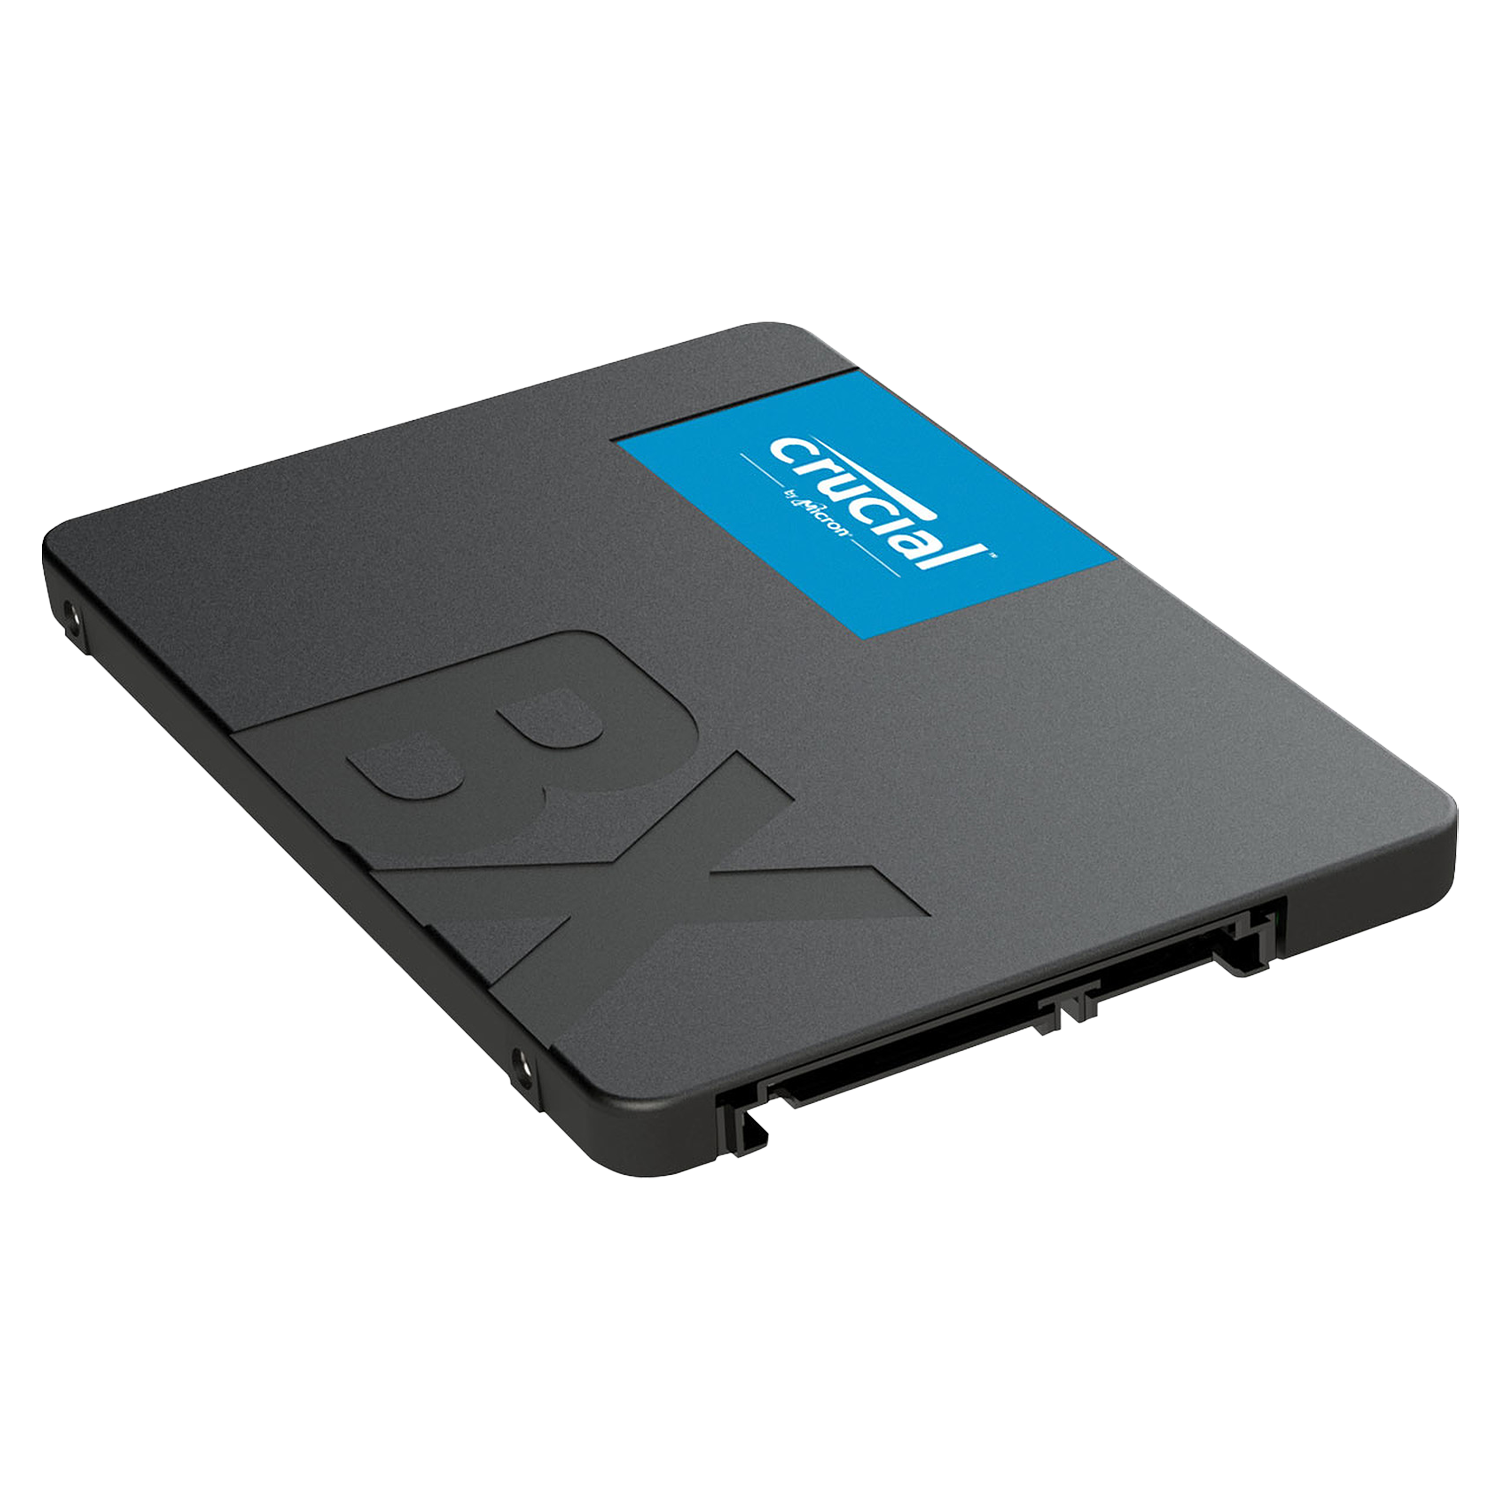 SSD 2.5" Crucial BX500 500GB SATA 3 - CT500BX500SSD1